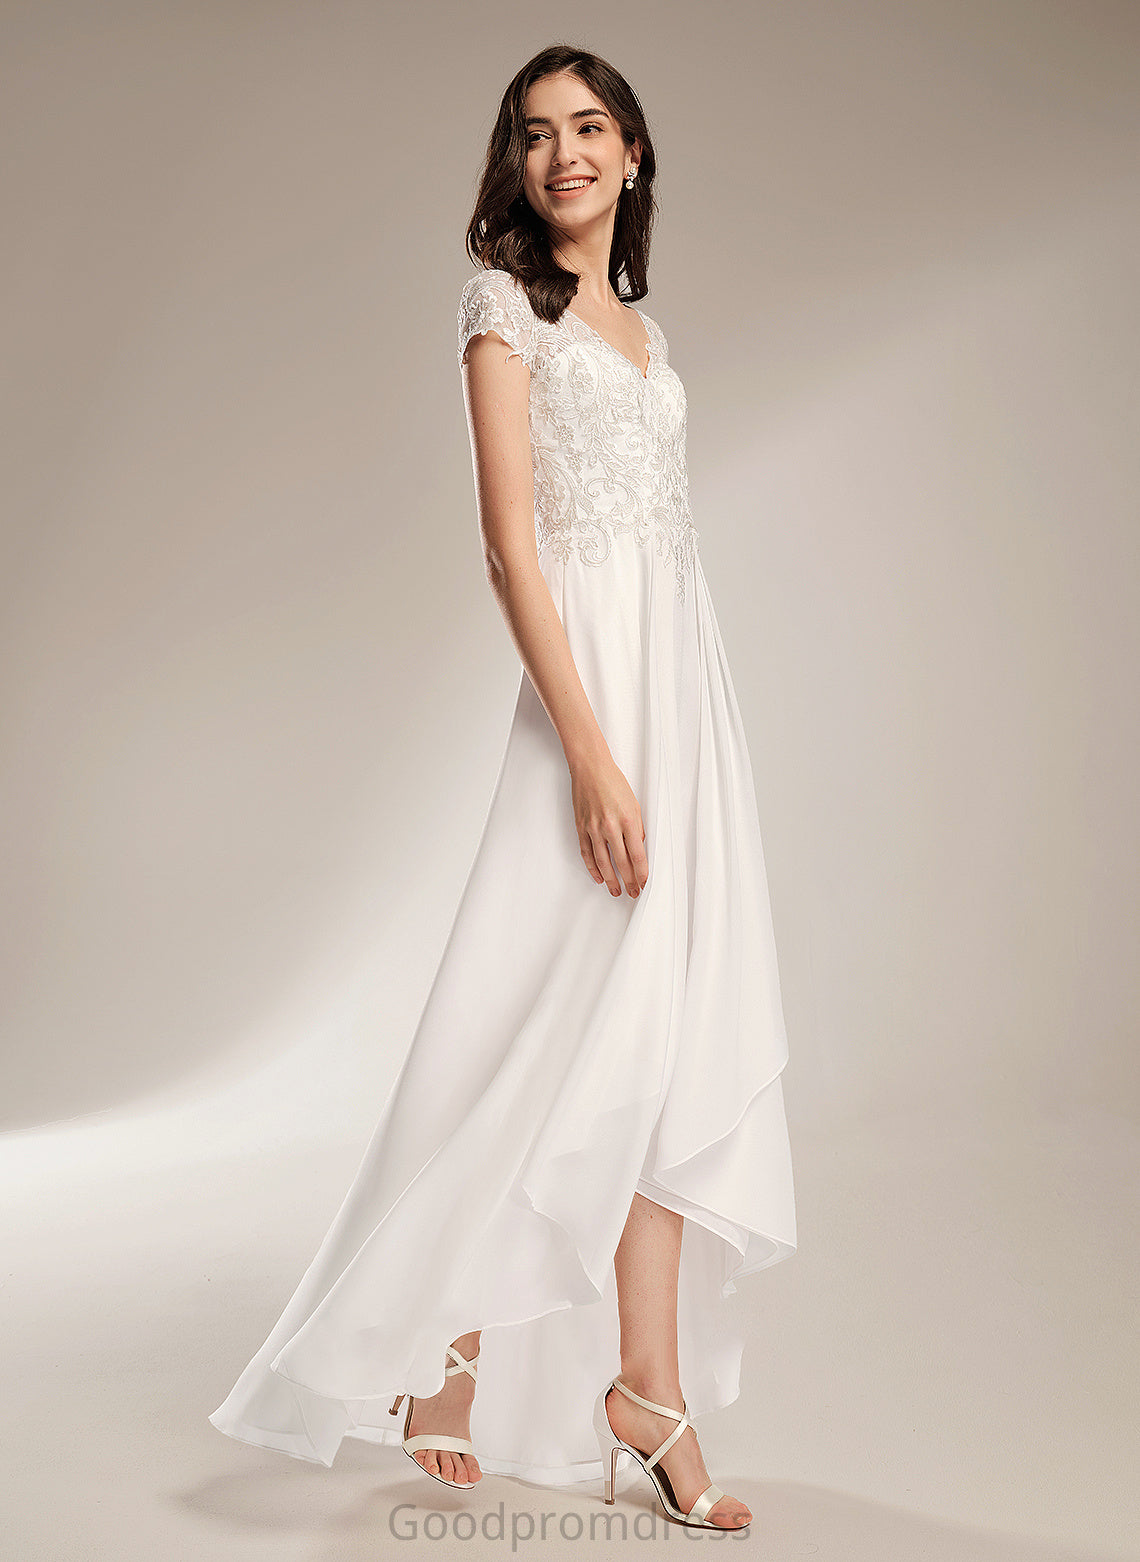 Dress Asymmetrical A-Line Wedding Dresses Summer Wedding Lace V-neck With